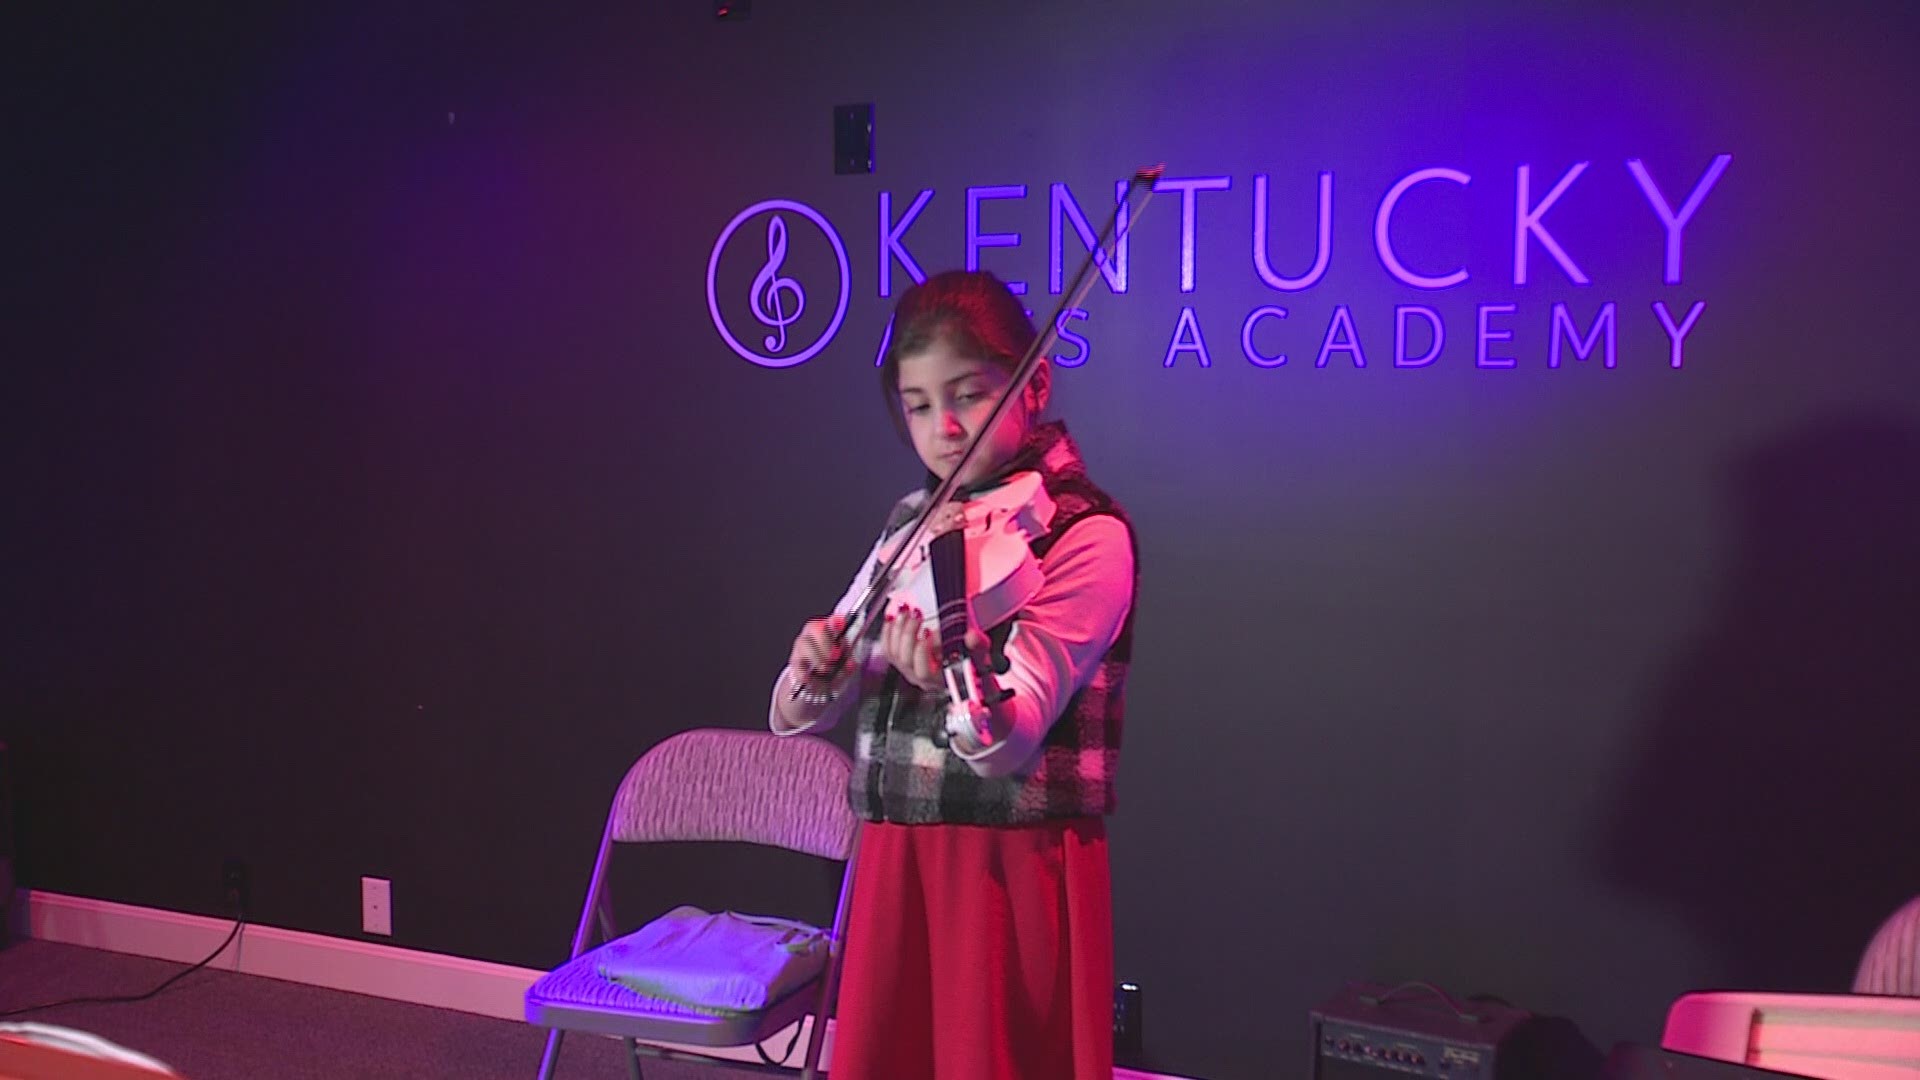 To learn more about Kentucky Arts Academy, call 502-873-5307 or go to KentuckyArtsAcademy.com.